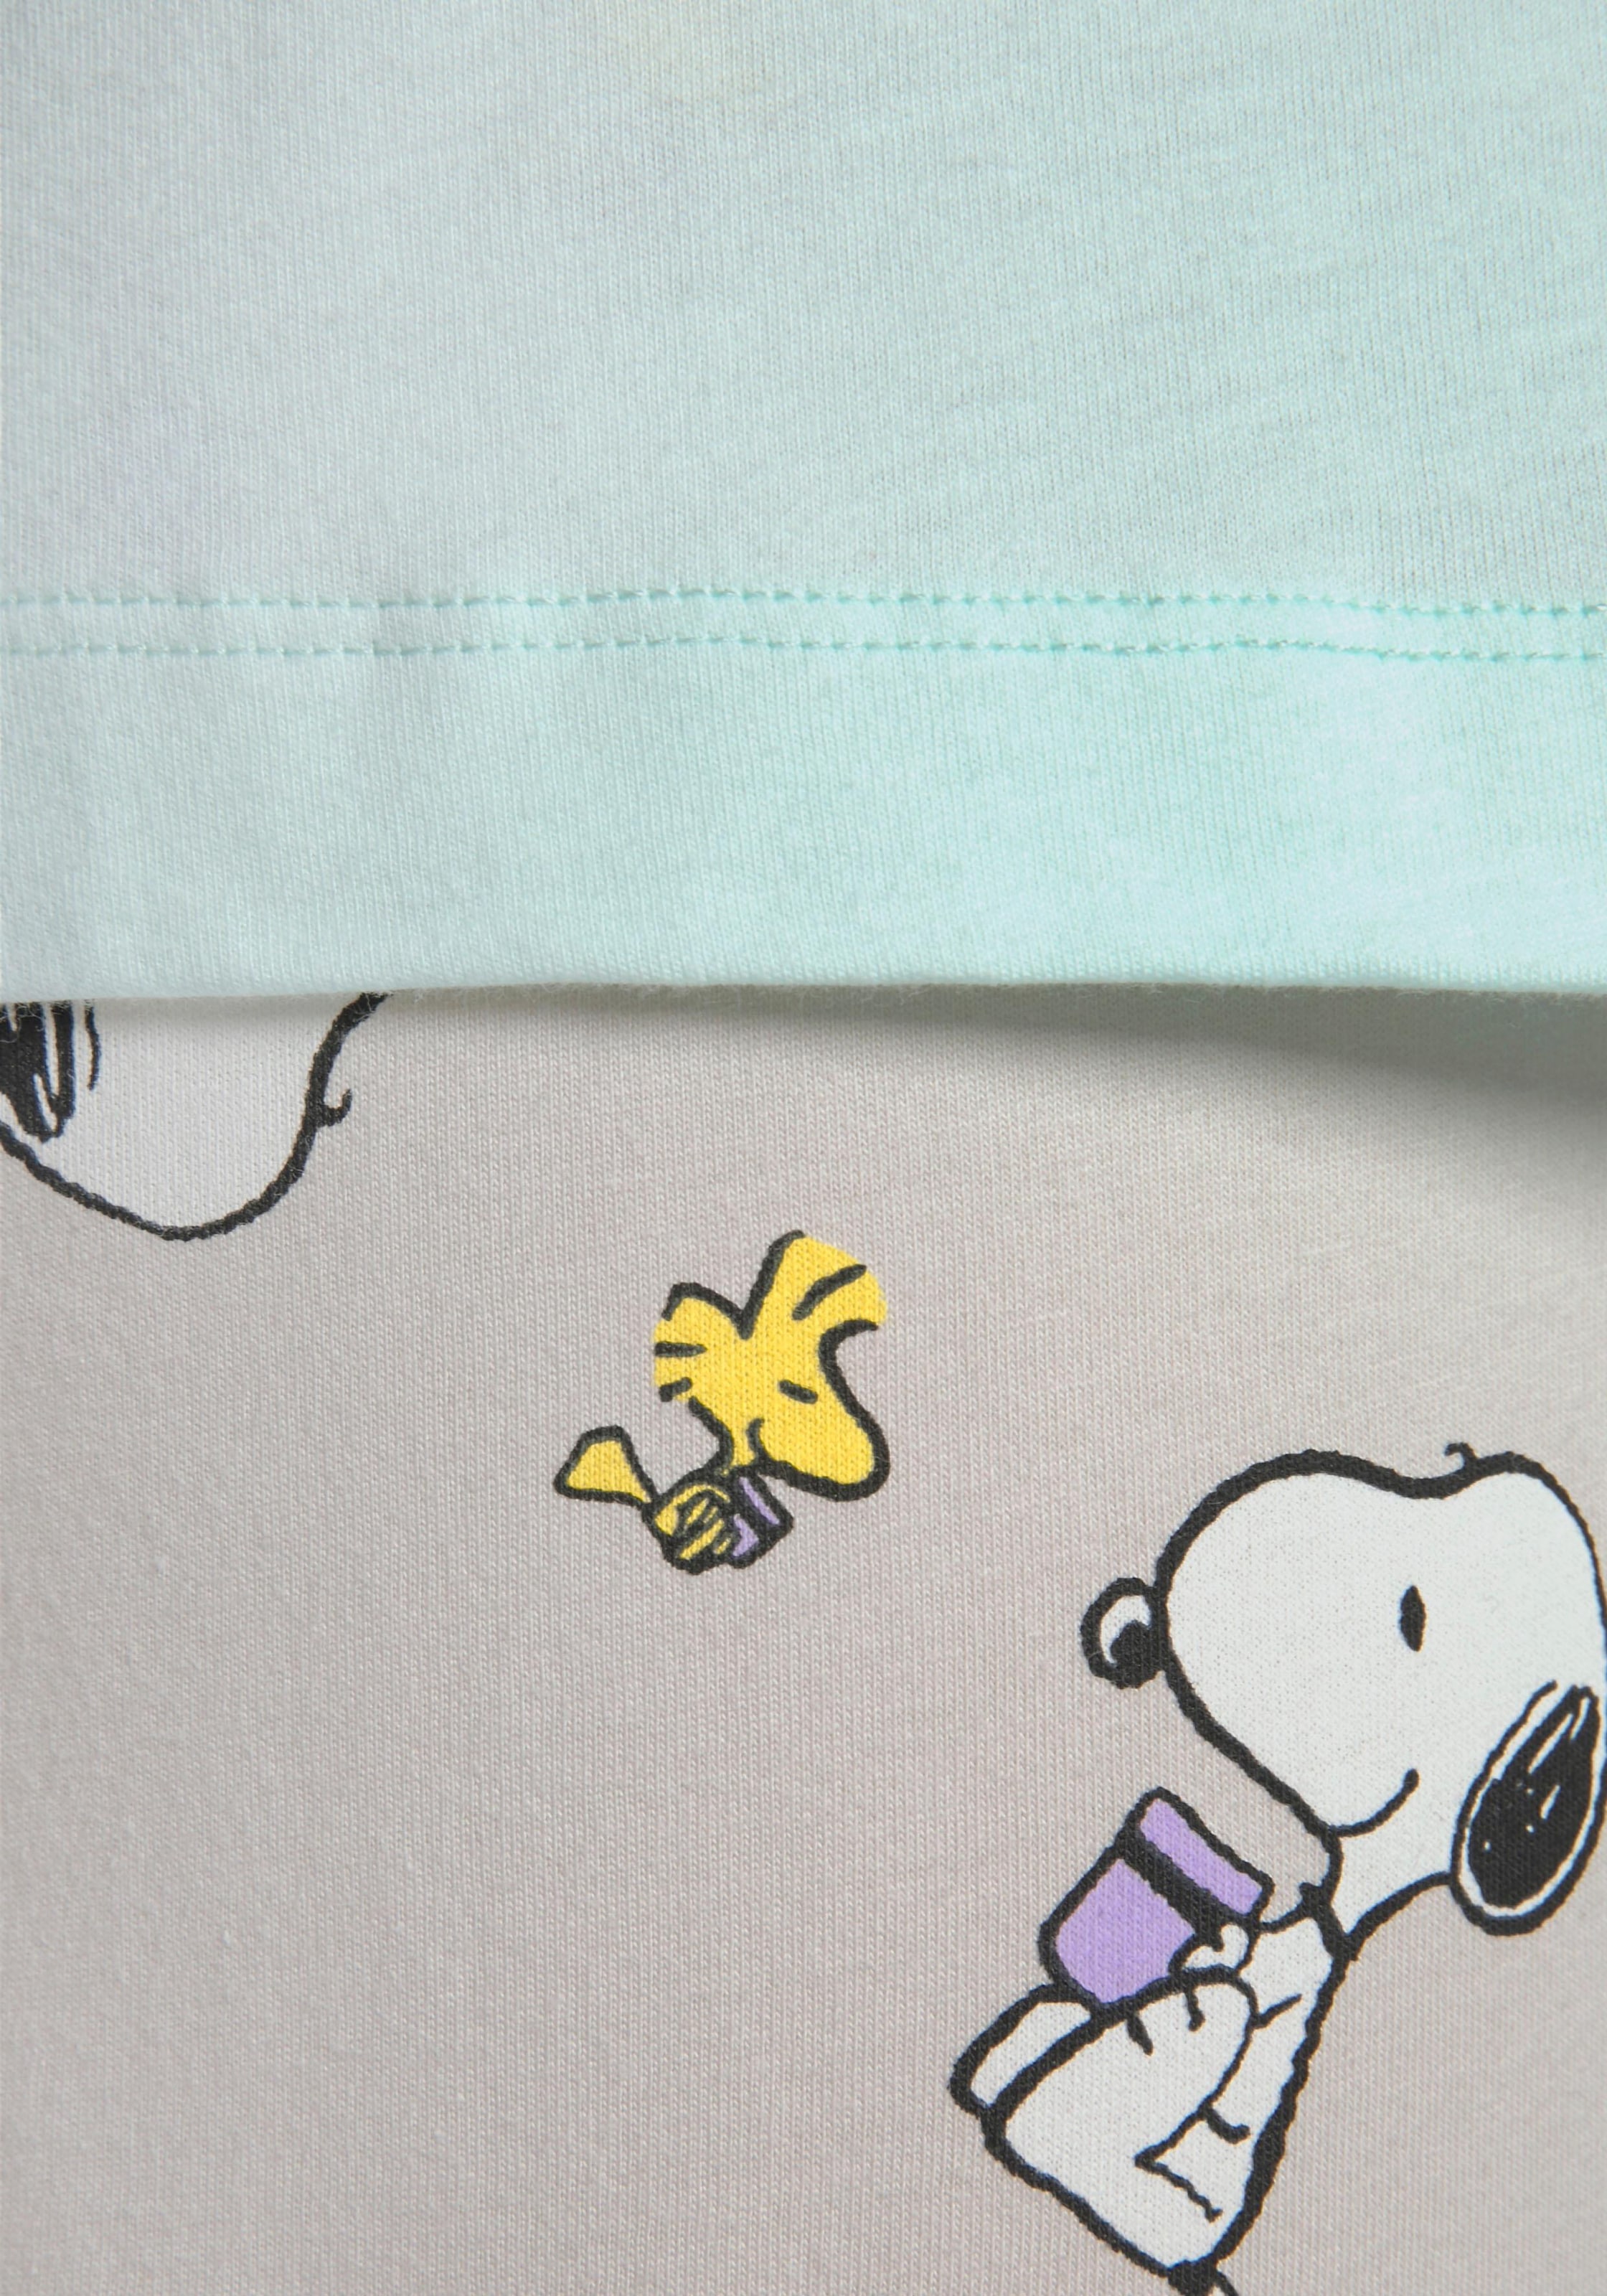 Peanuts Pyjama, (2 tlg., 1 Stück), mit Snoopy und Woodstock Druck Trouver  sur